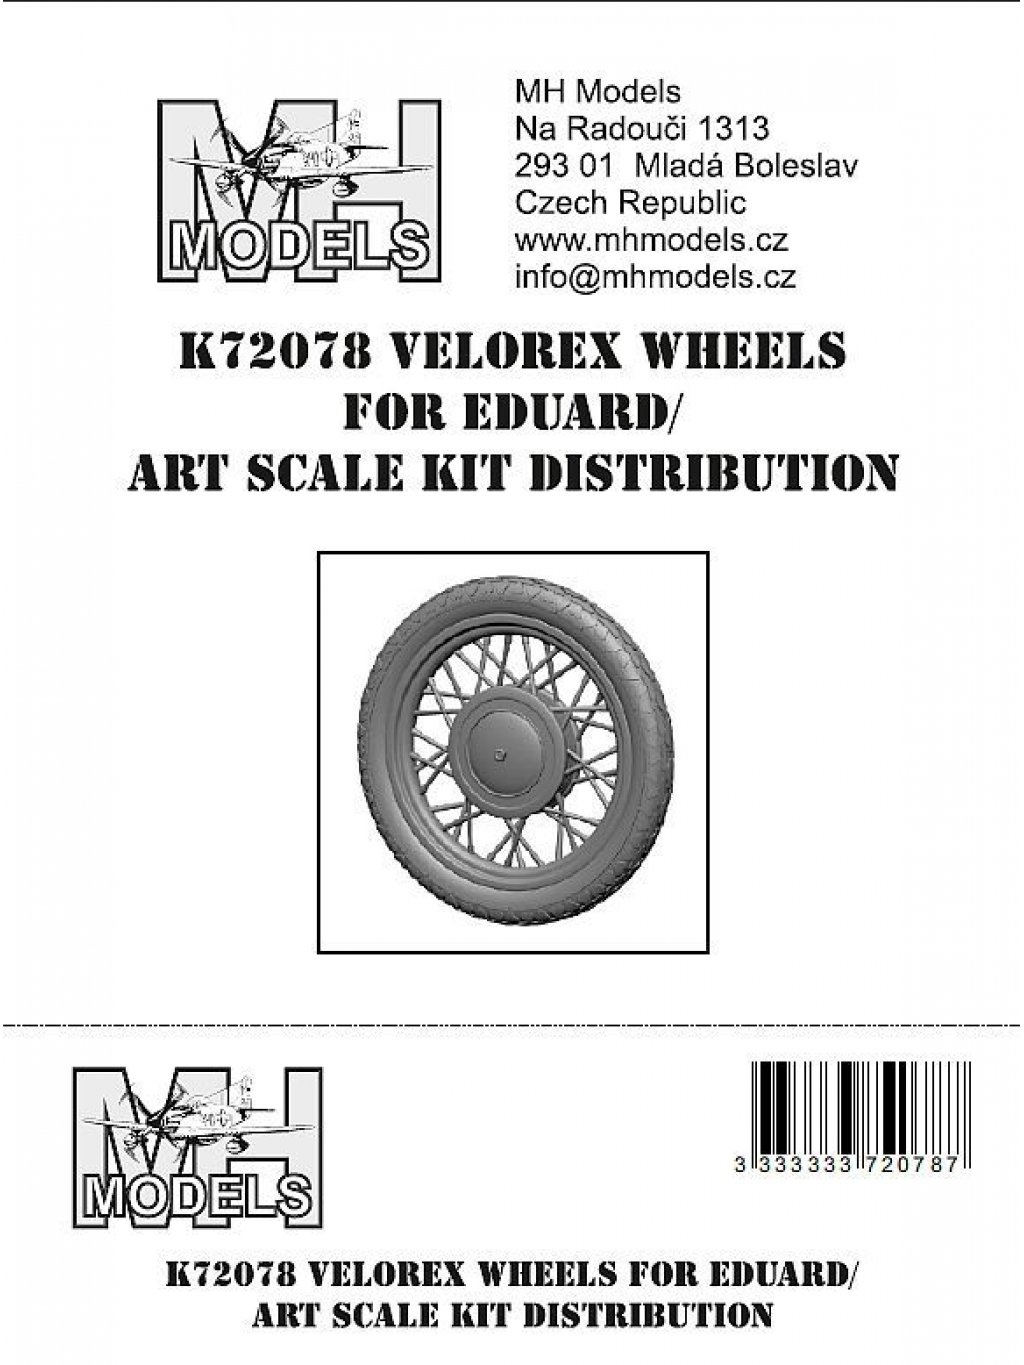 Velorex wheels for Eduard/Art Scale Kit Distribution